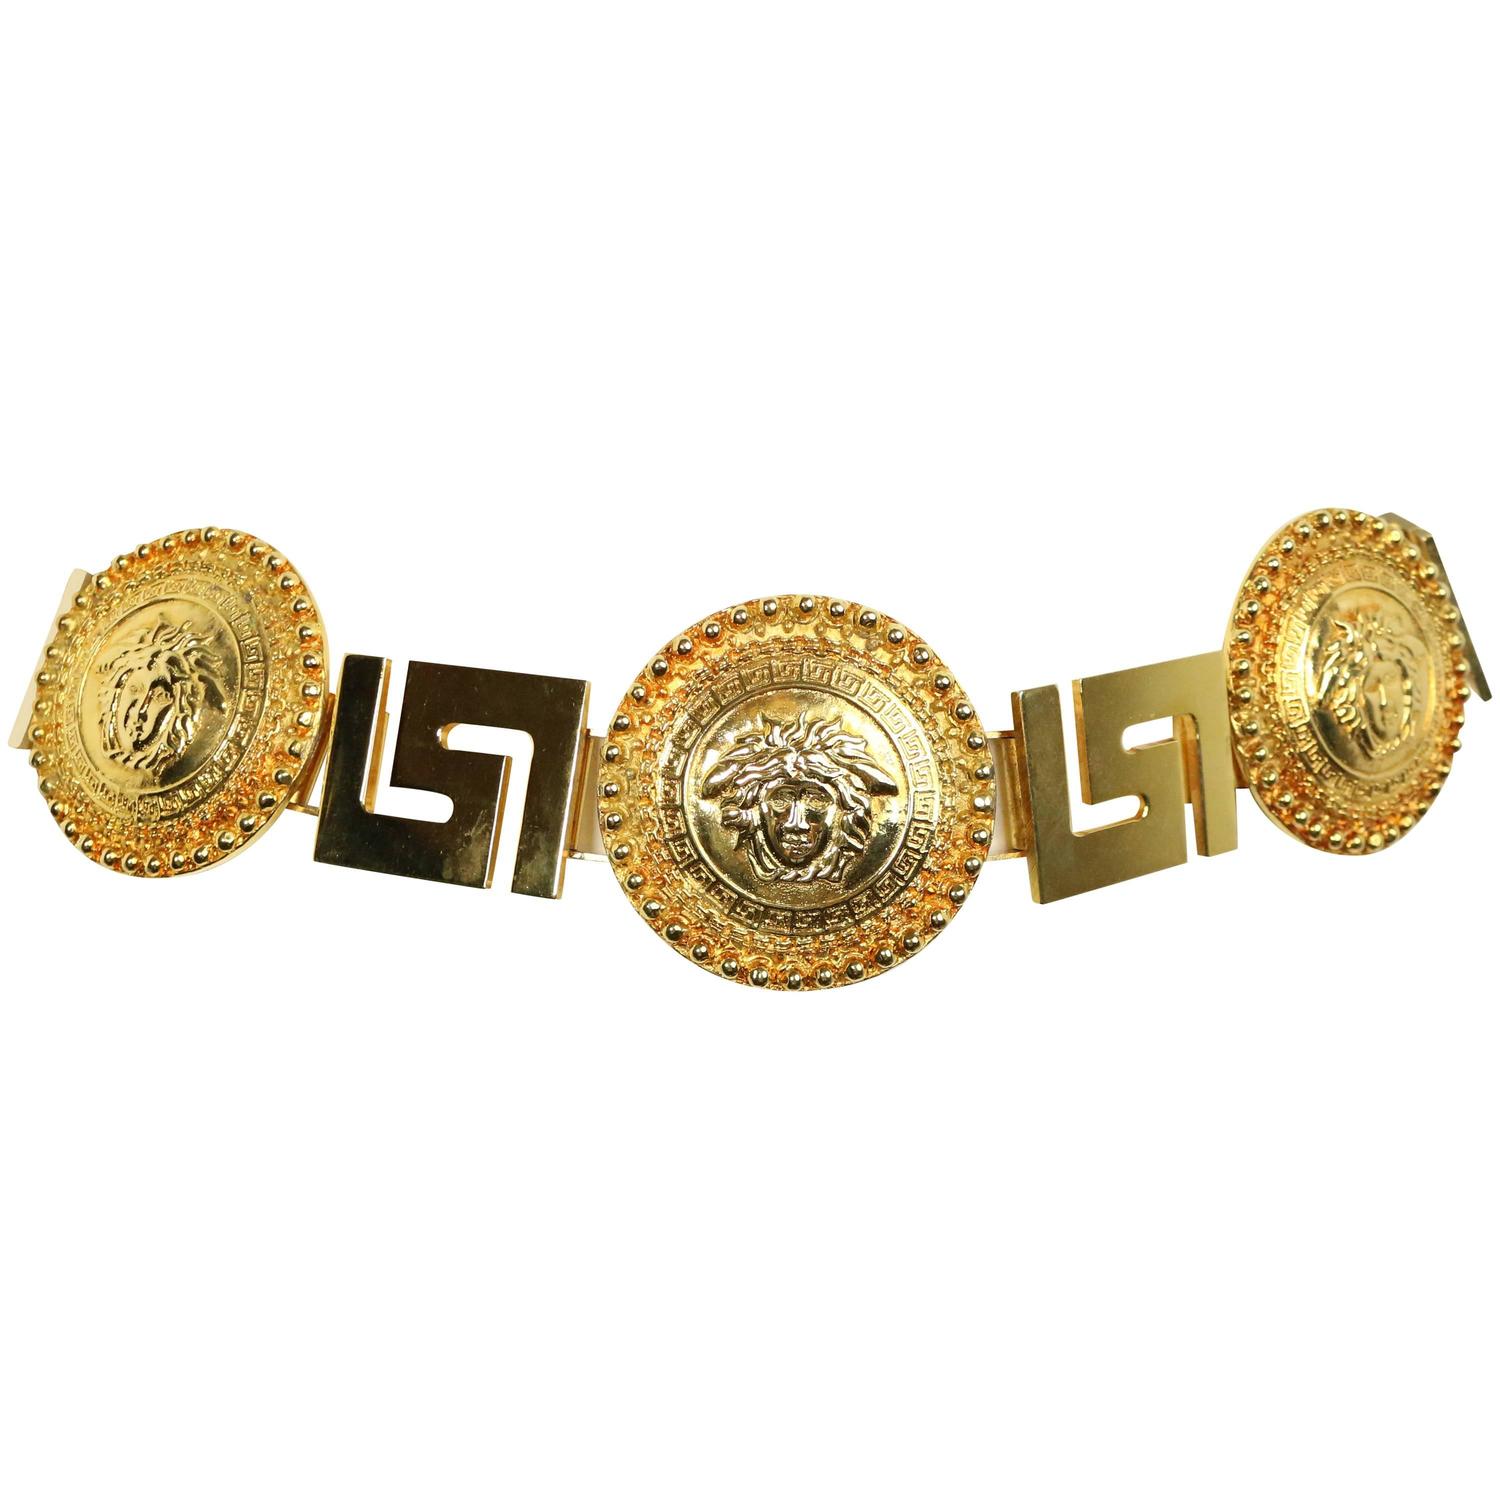 Gianni Versace Medusa Gold Chain Belt For Sale at 1stdibs